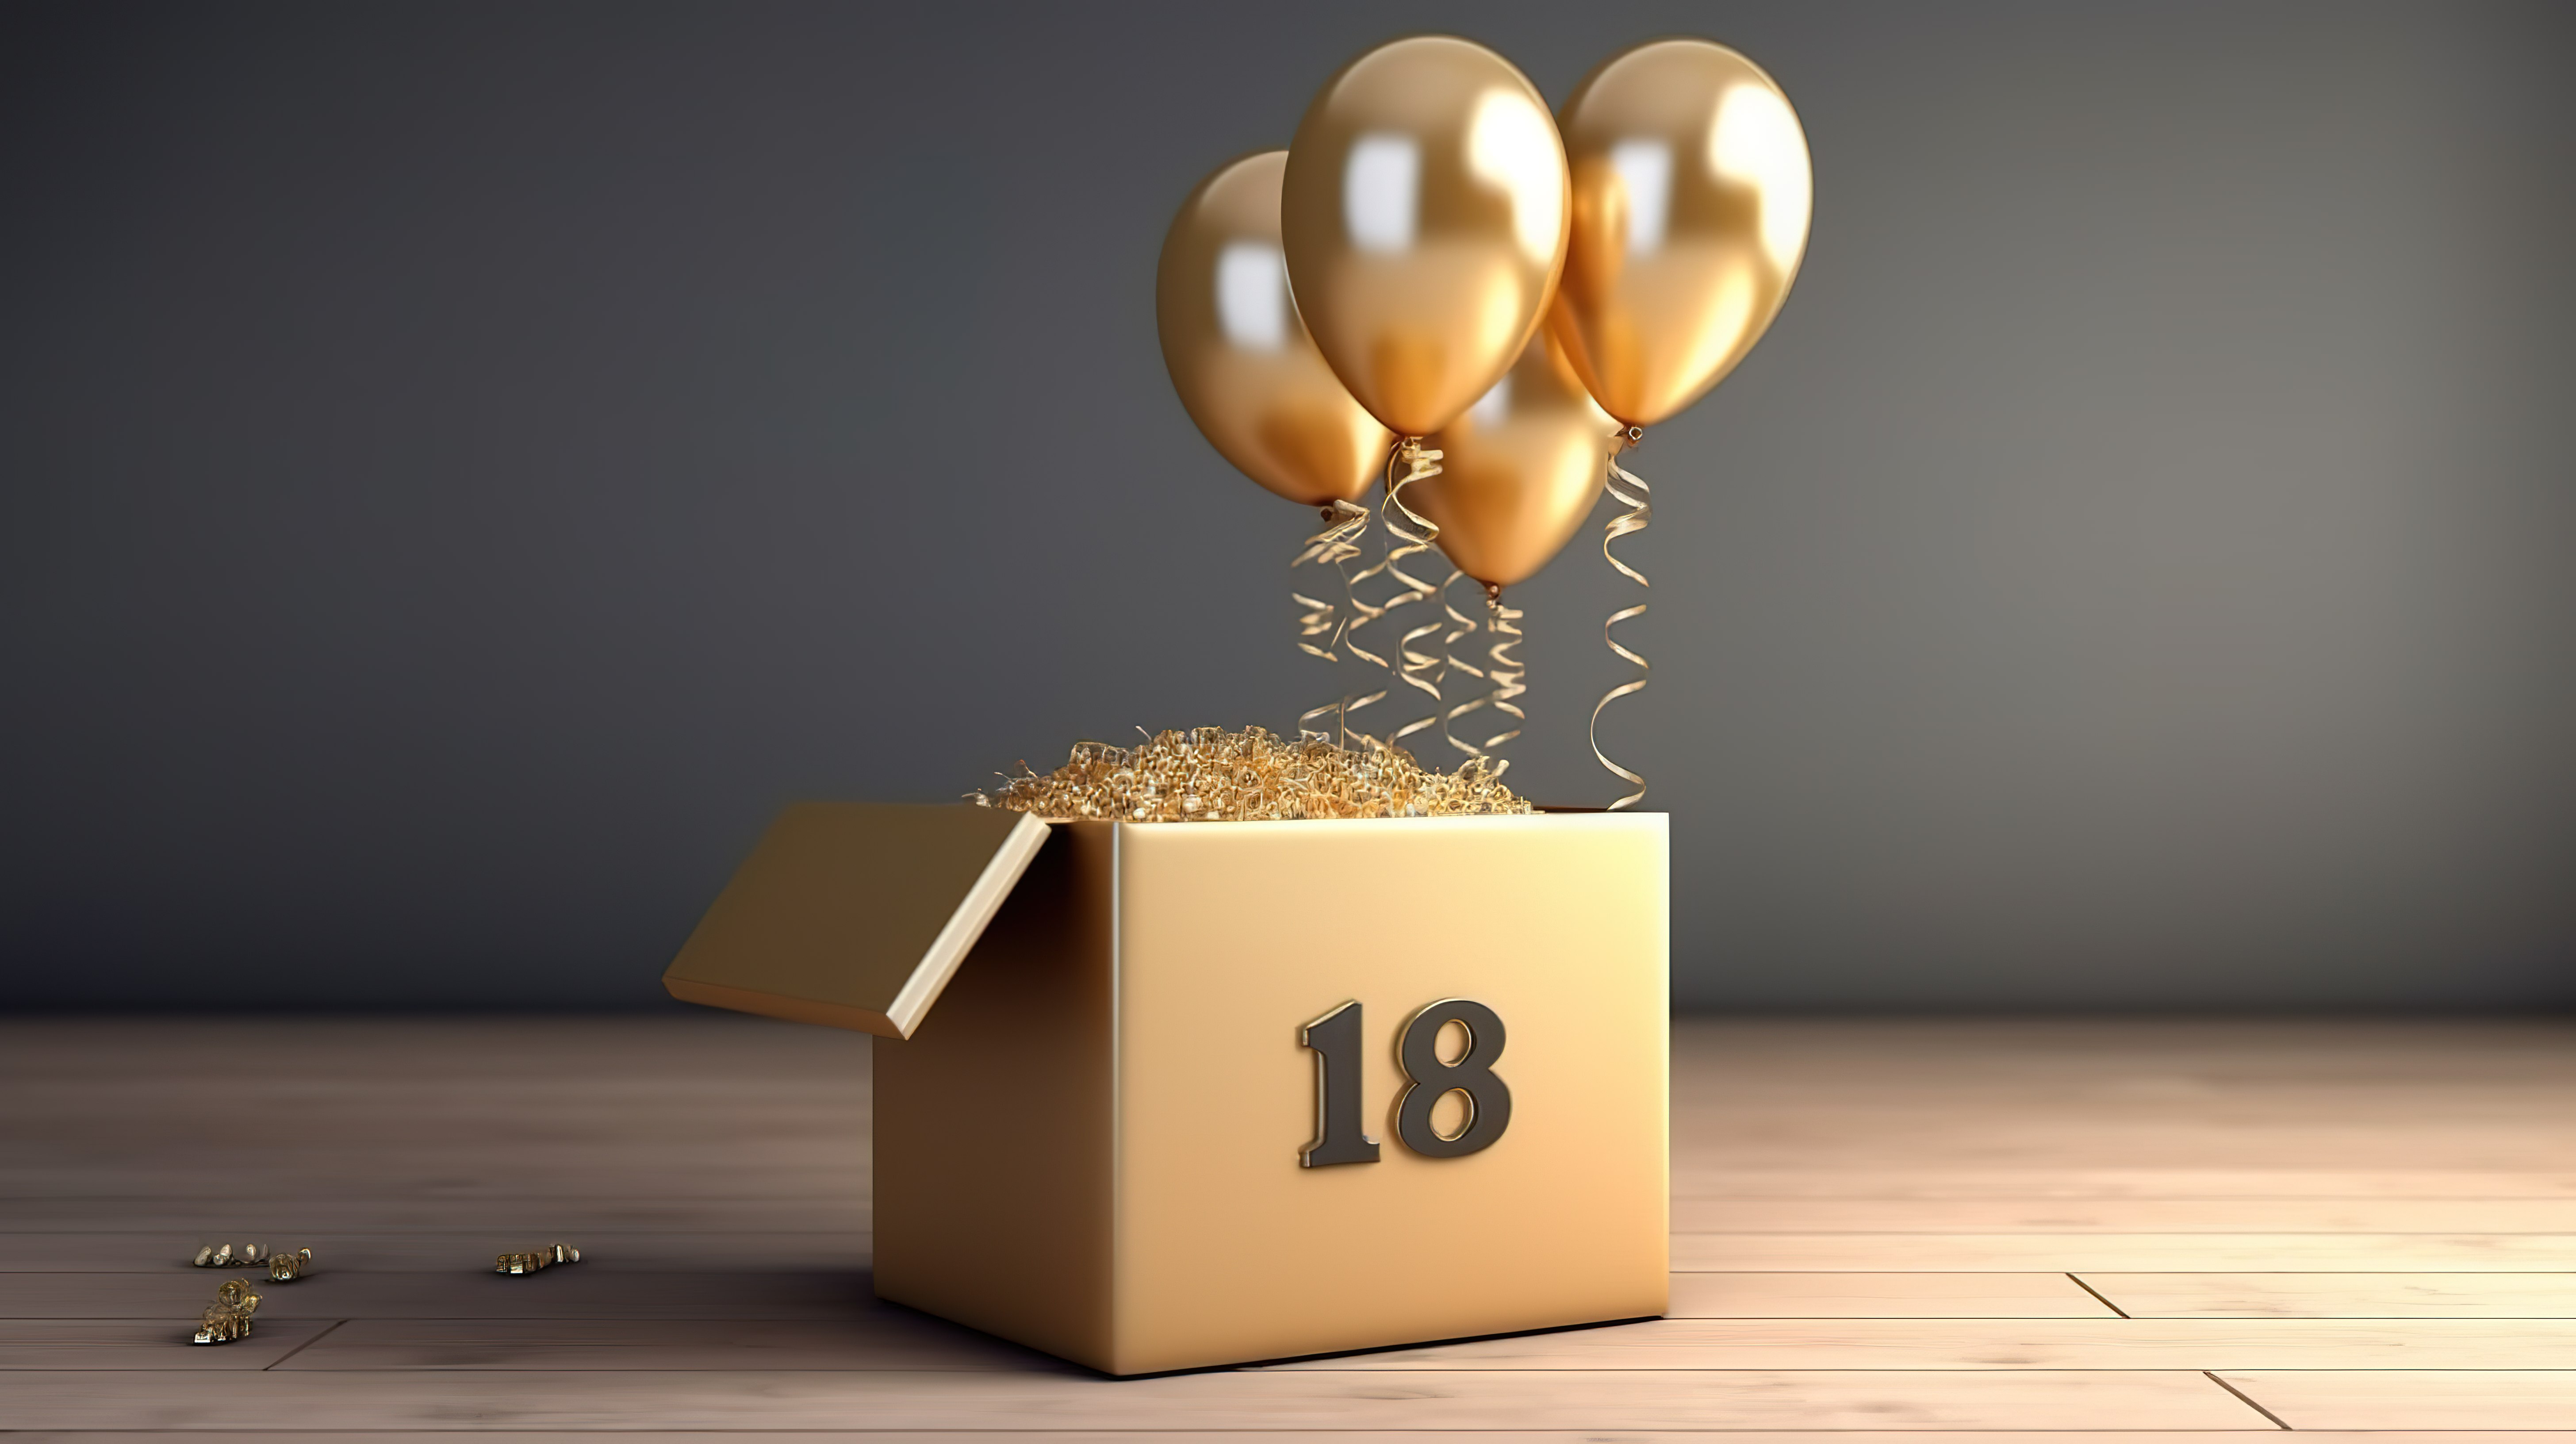 3D 渲染金色惊喜气球和盒子，用于 18 岁生日庆祝活动图片